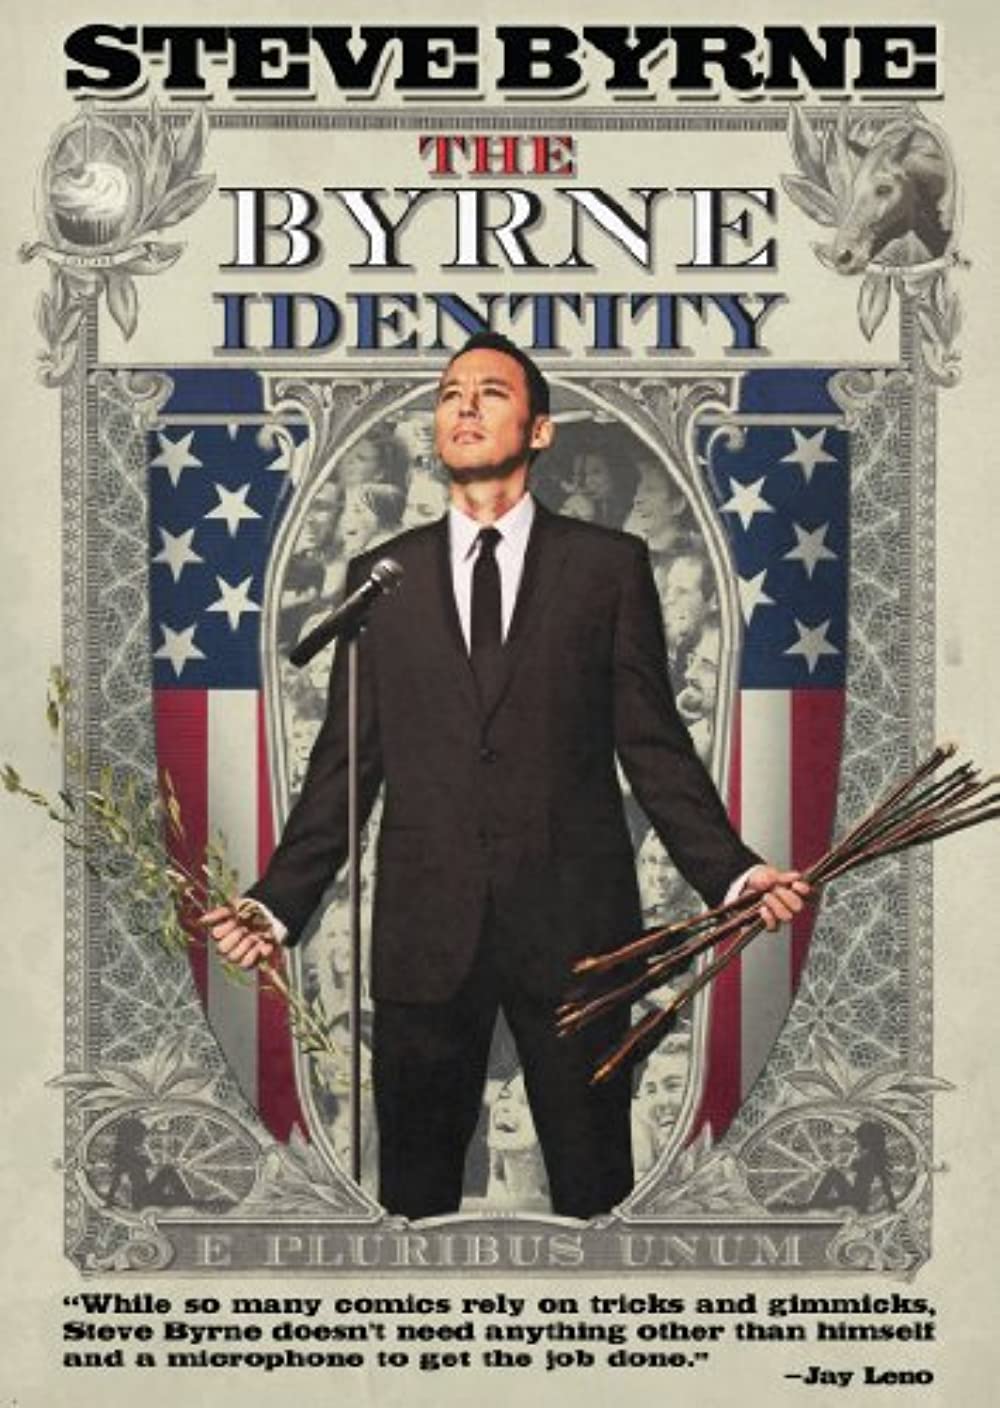 Download Steve Byrne: The Byrne Identity Movie | Steve Byrne: The Byrne Identity Hd, Dvd, Divx